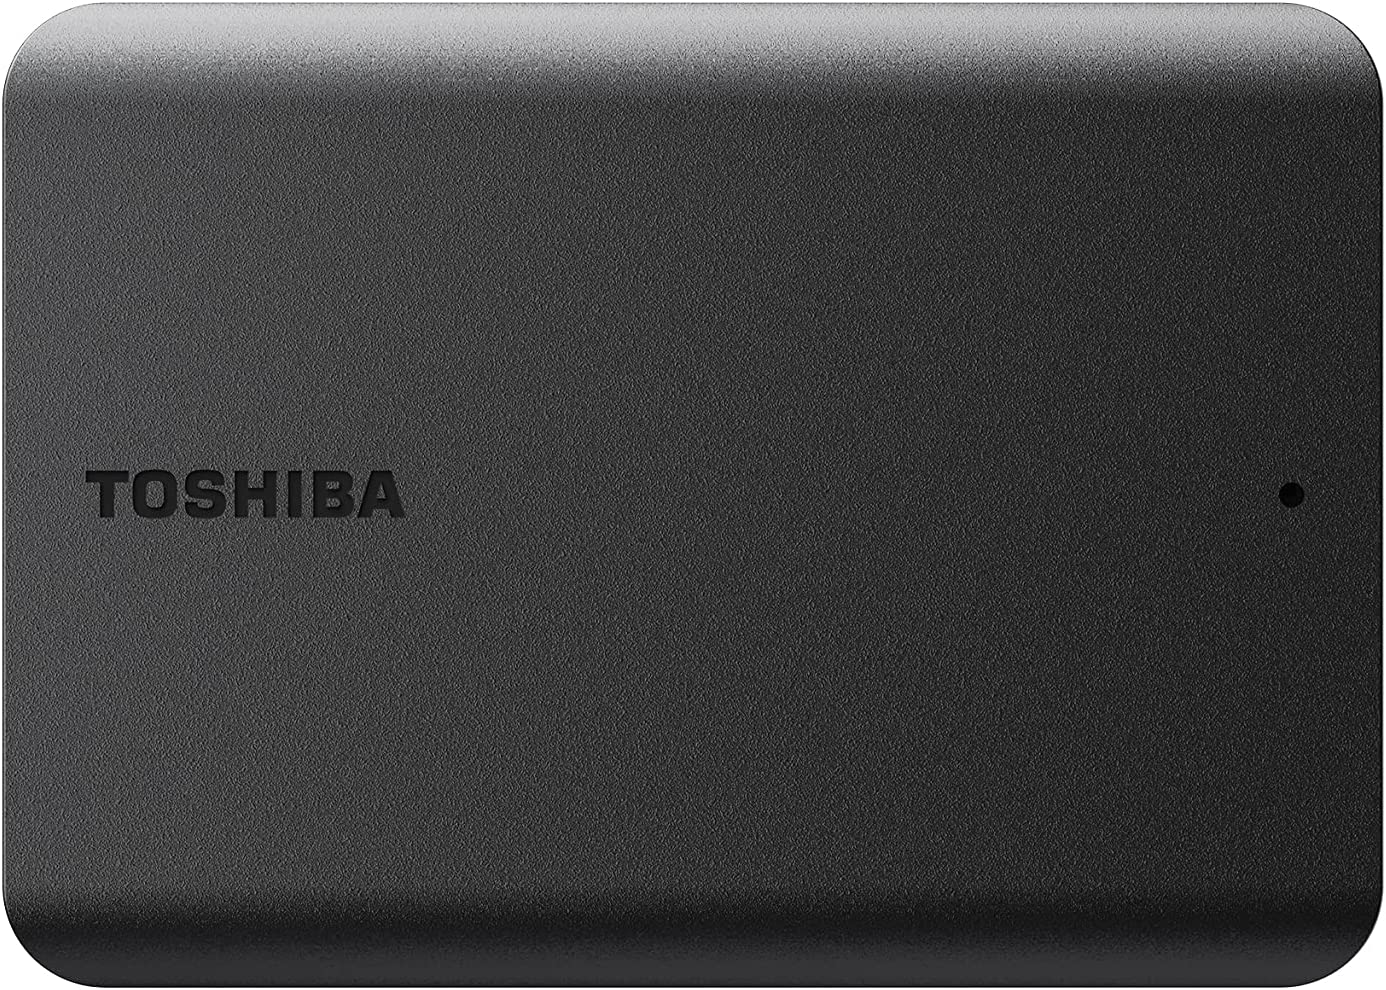 Toshiba Canvio Basics 1TB Portable External Hard Drive [...]